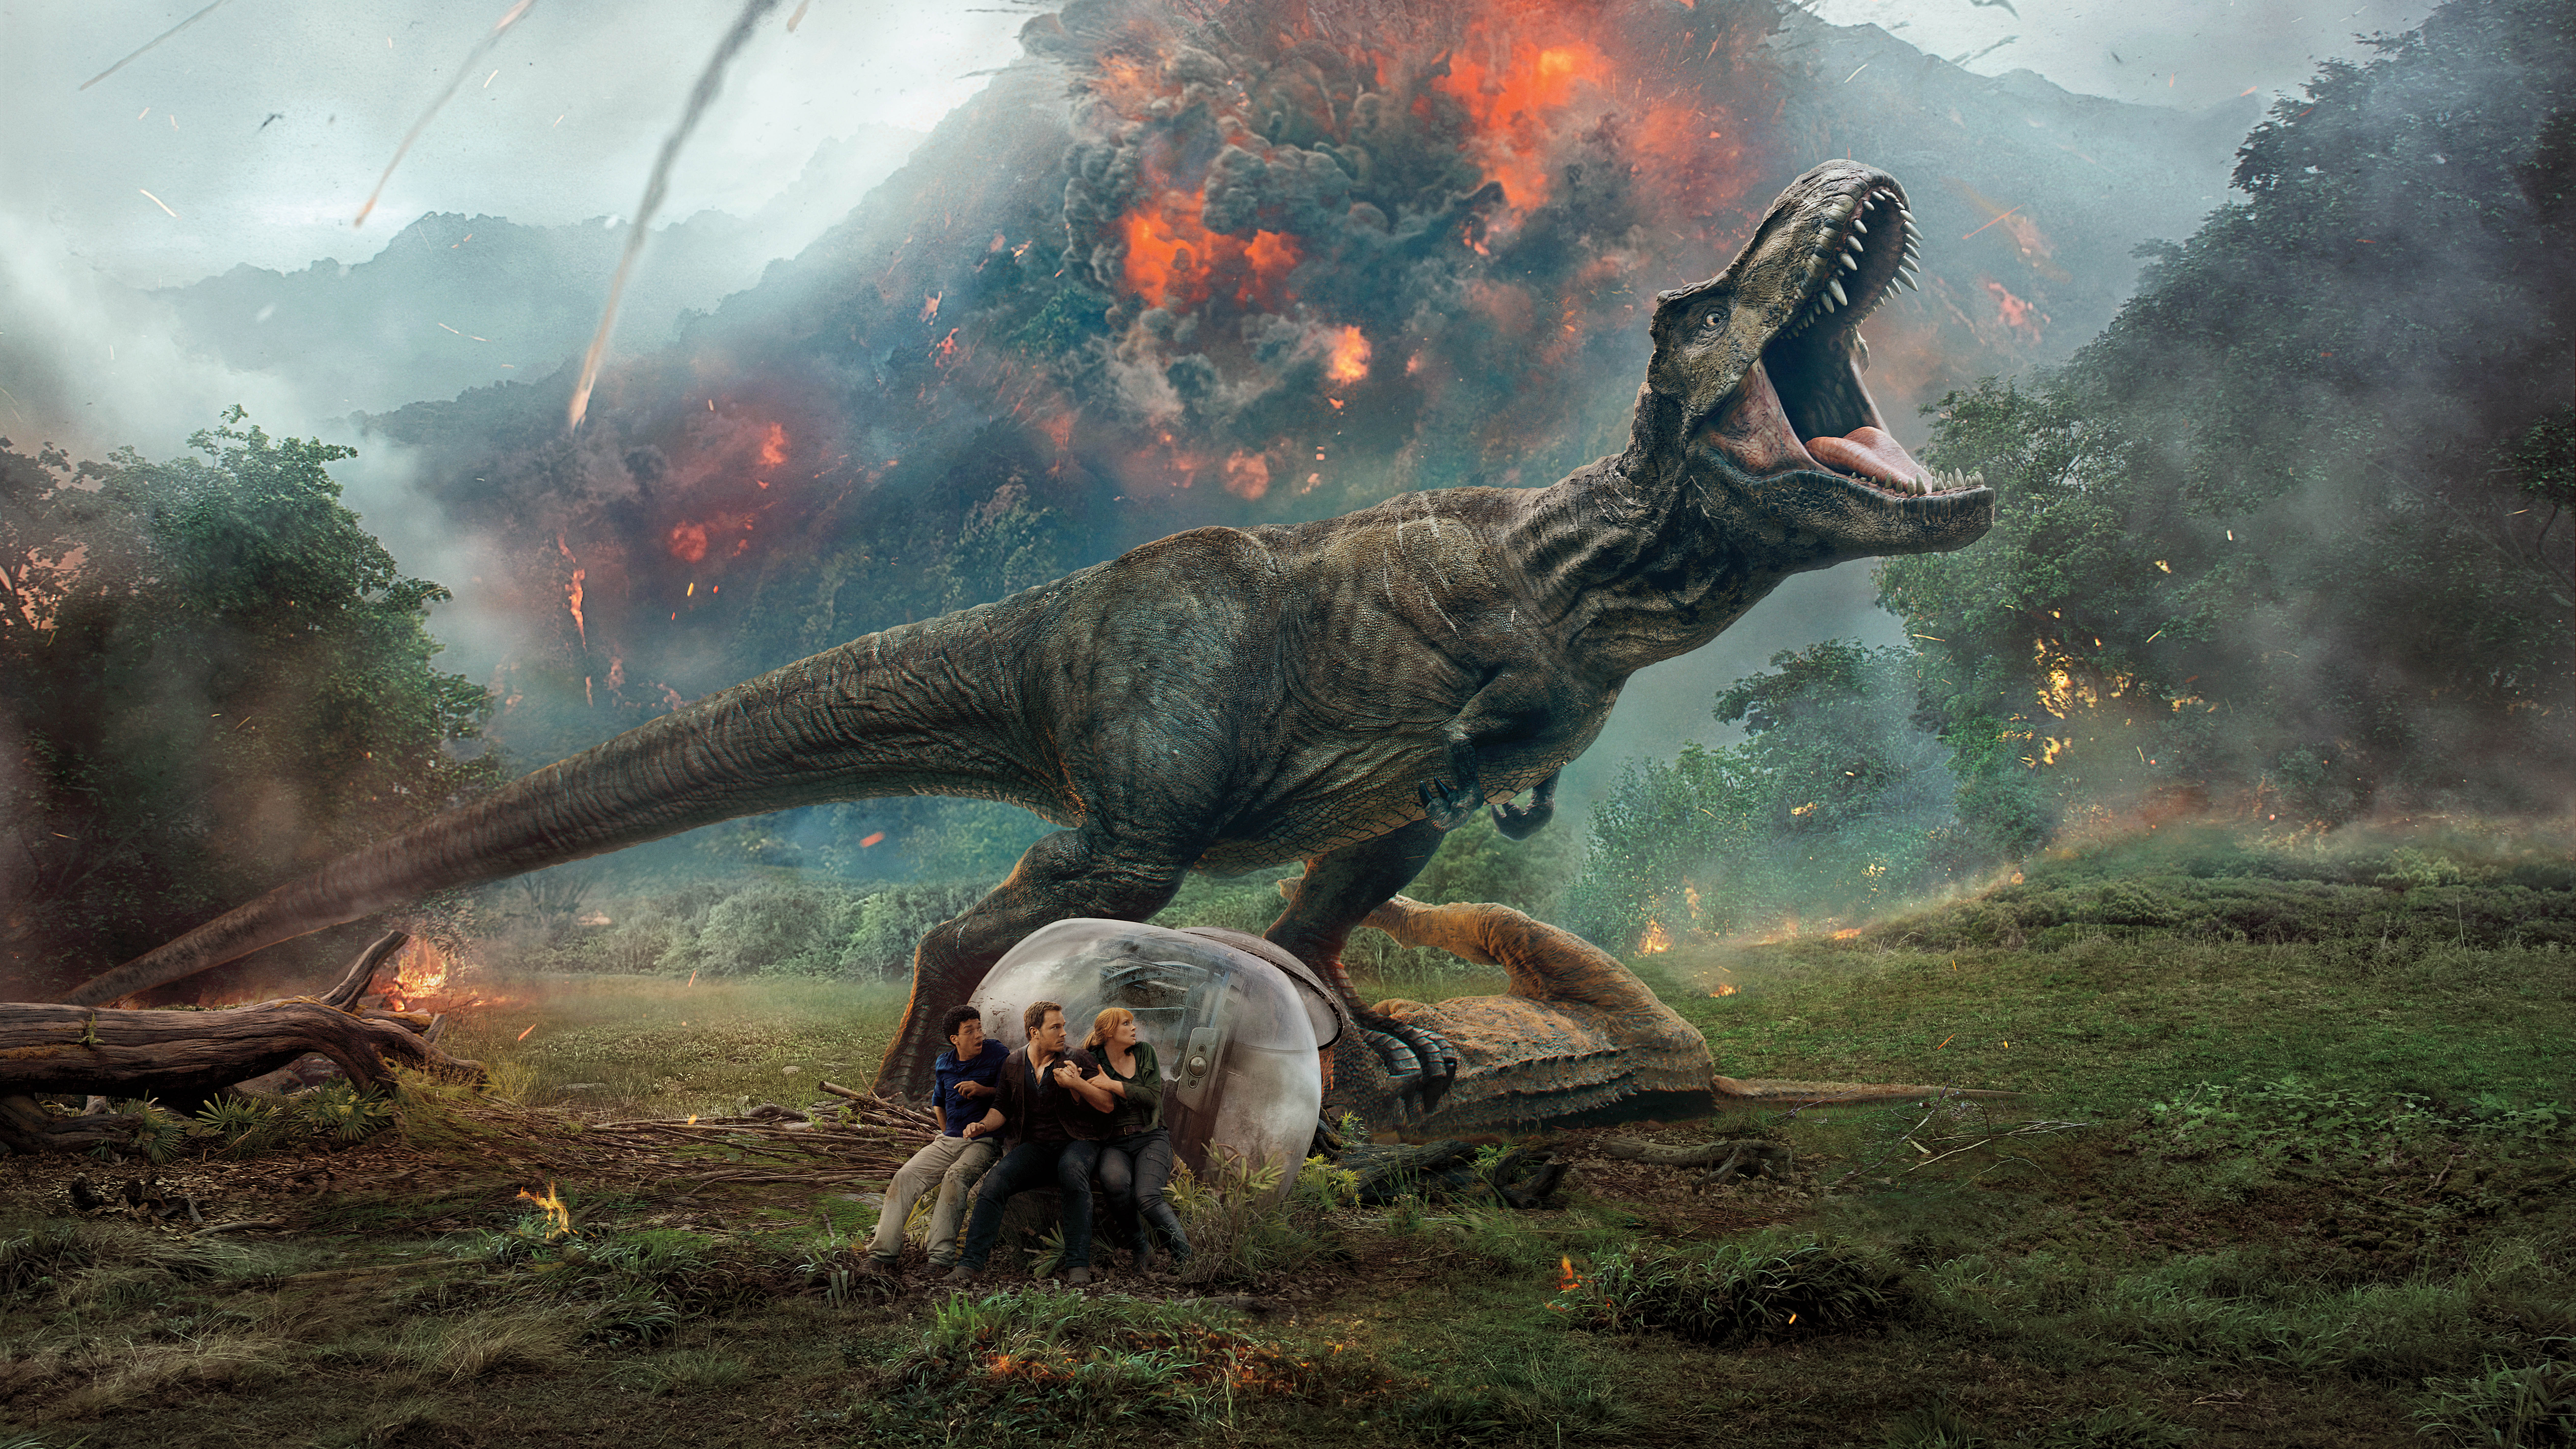 wallpapers de peliculas,dinosaur,action adventure game,extinction,tyrannosaurus,pc game